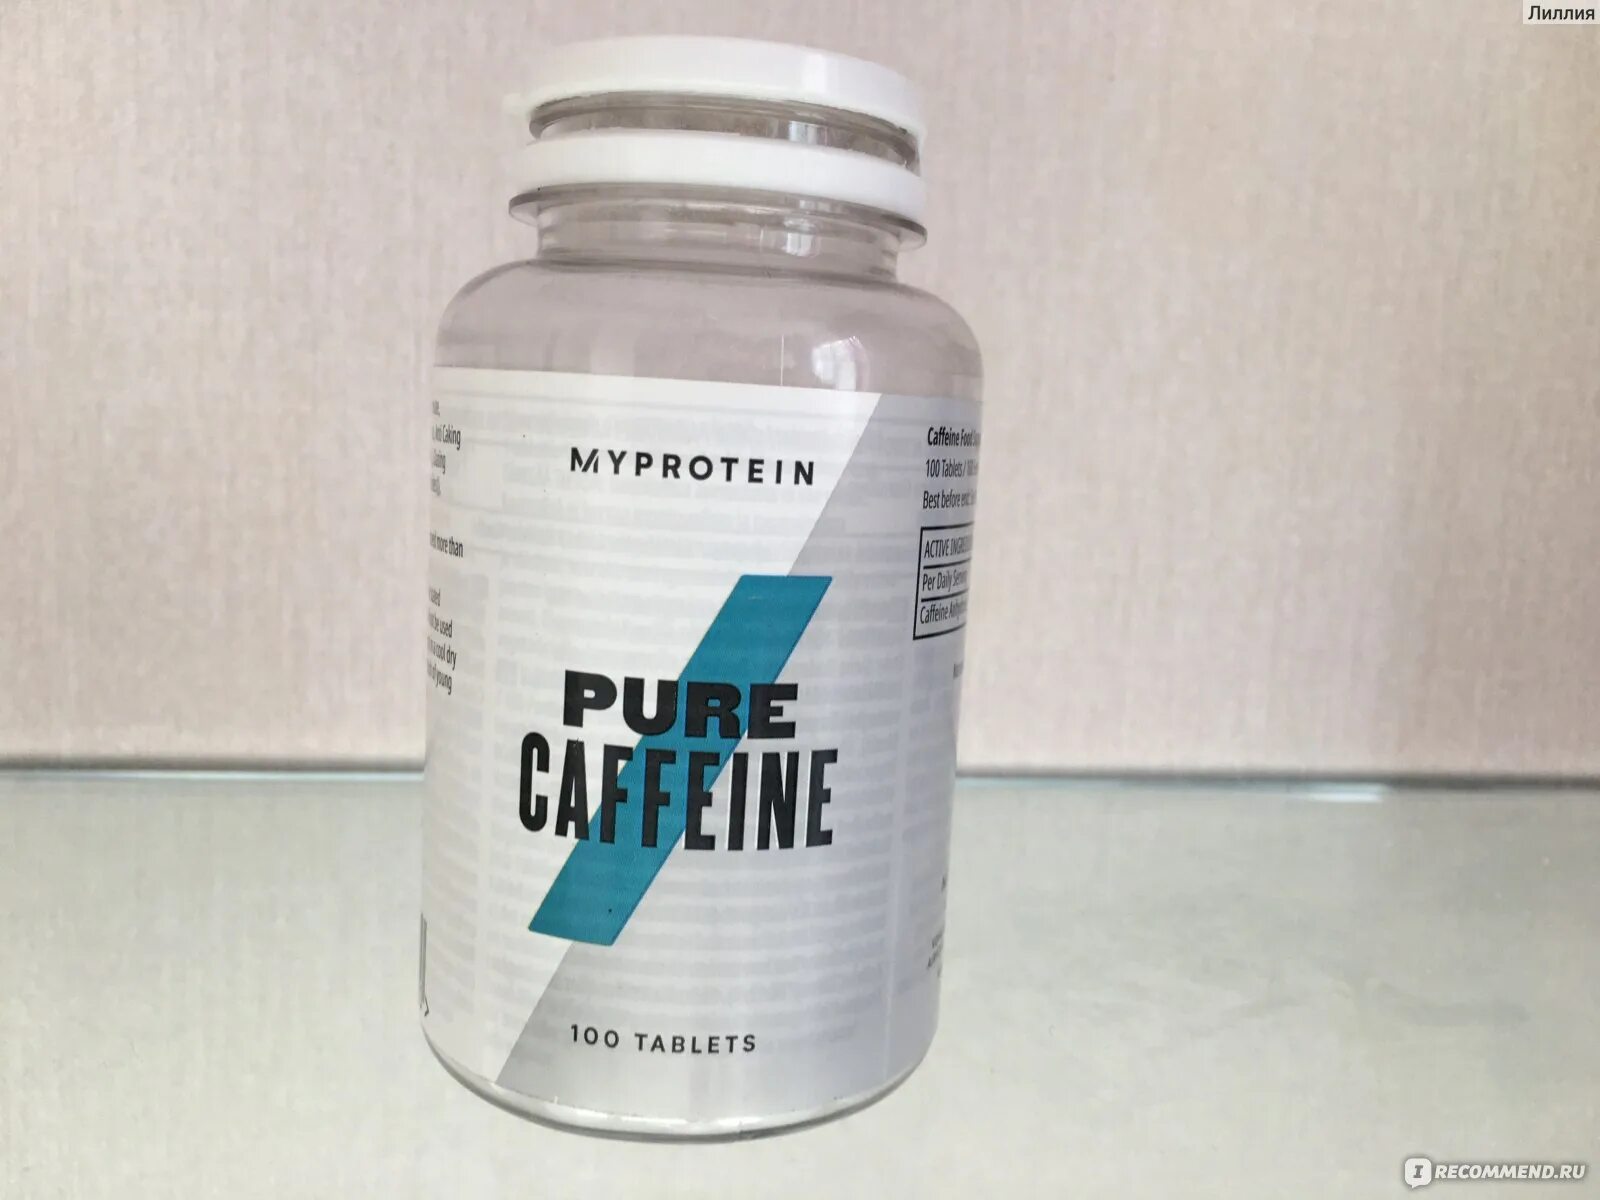 Myprotein Pure Caffeine. Кофеин в чистом виде. Myprotein банки матрешки. Чистый кофеин